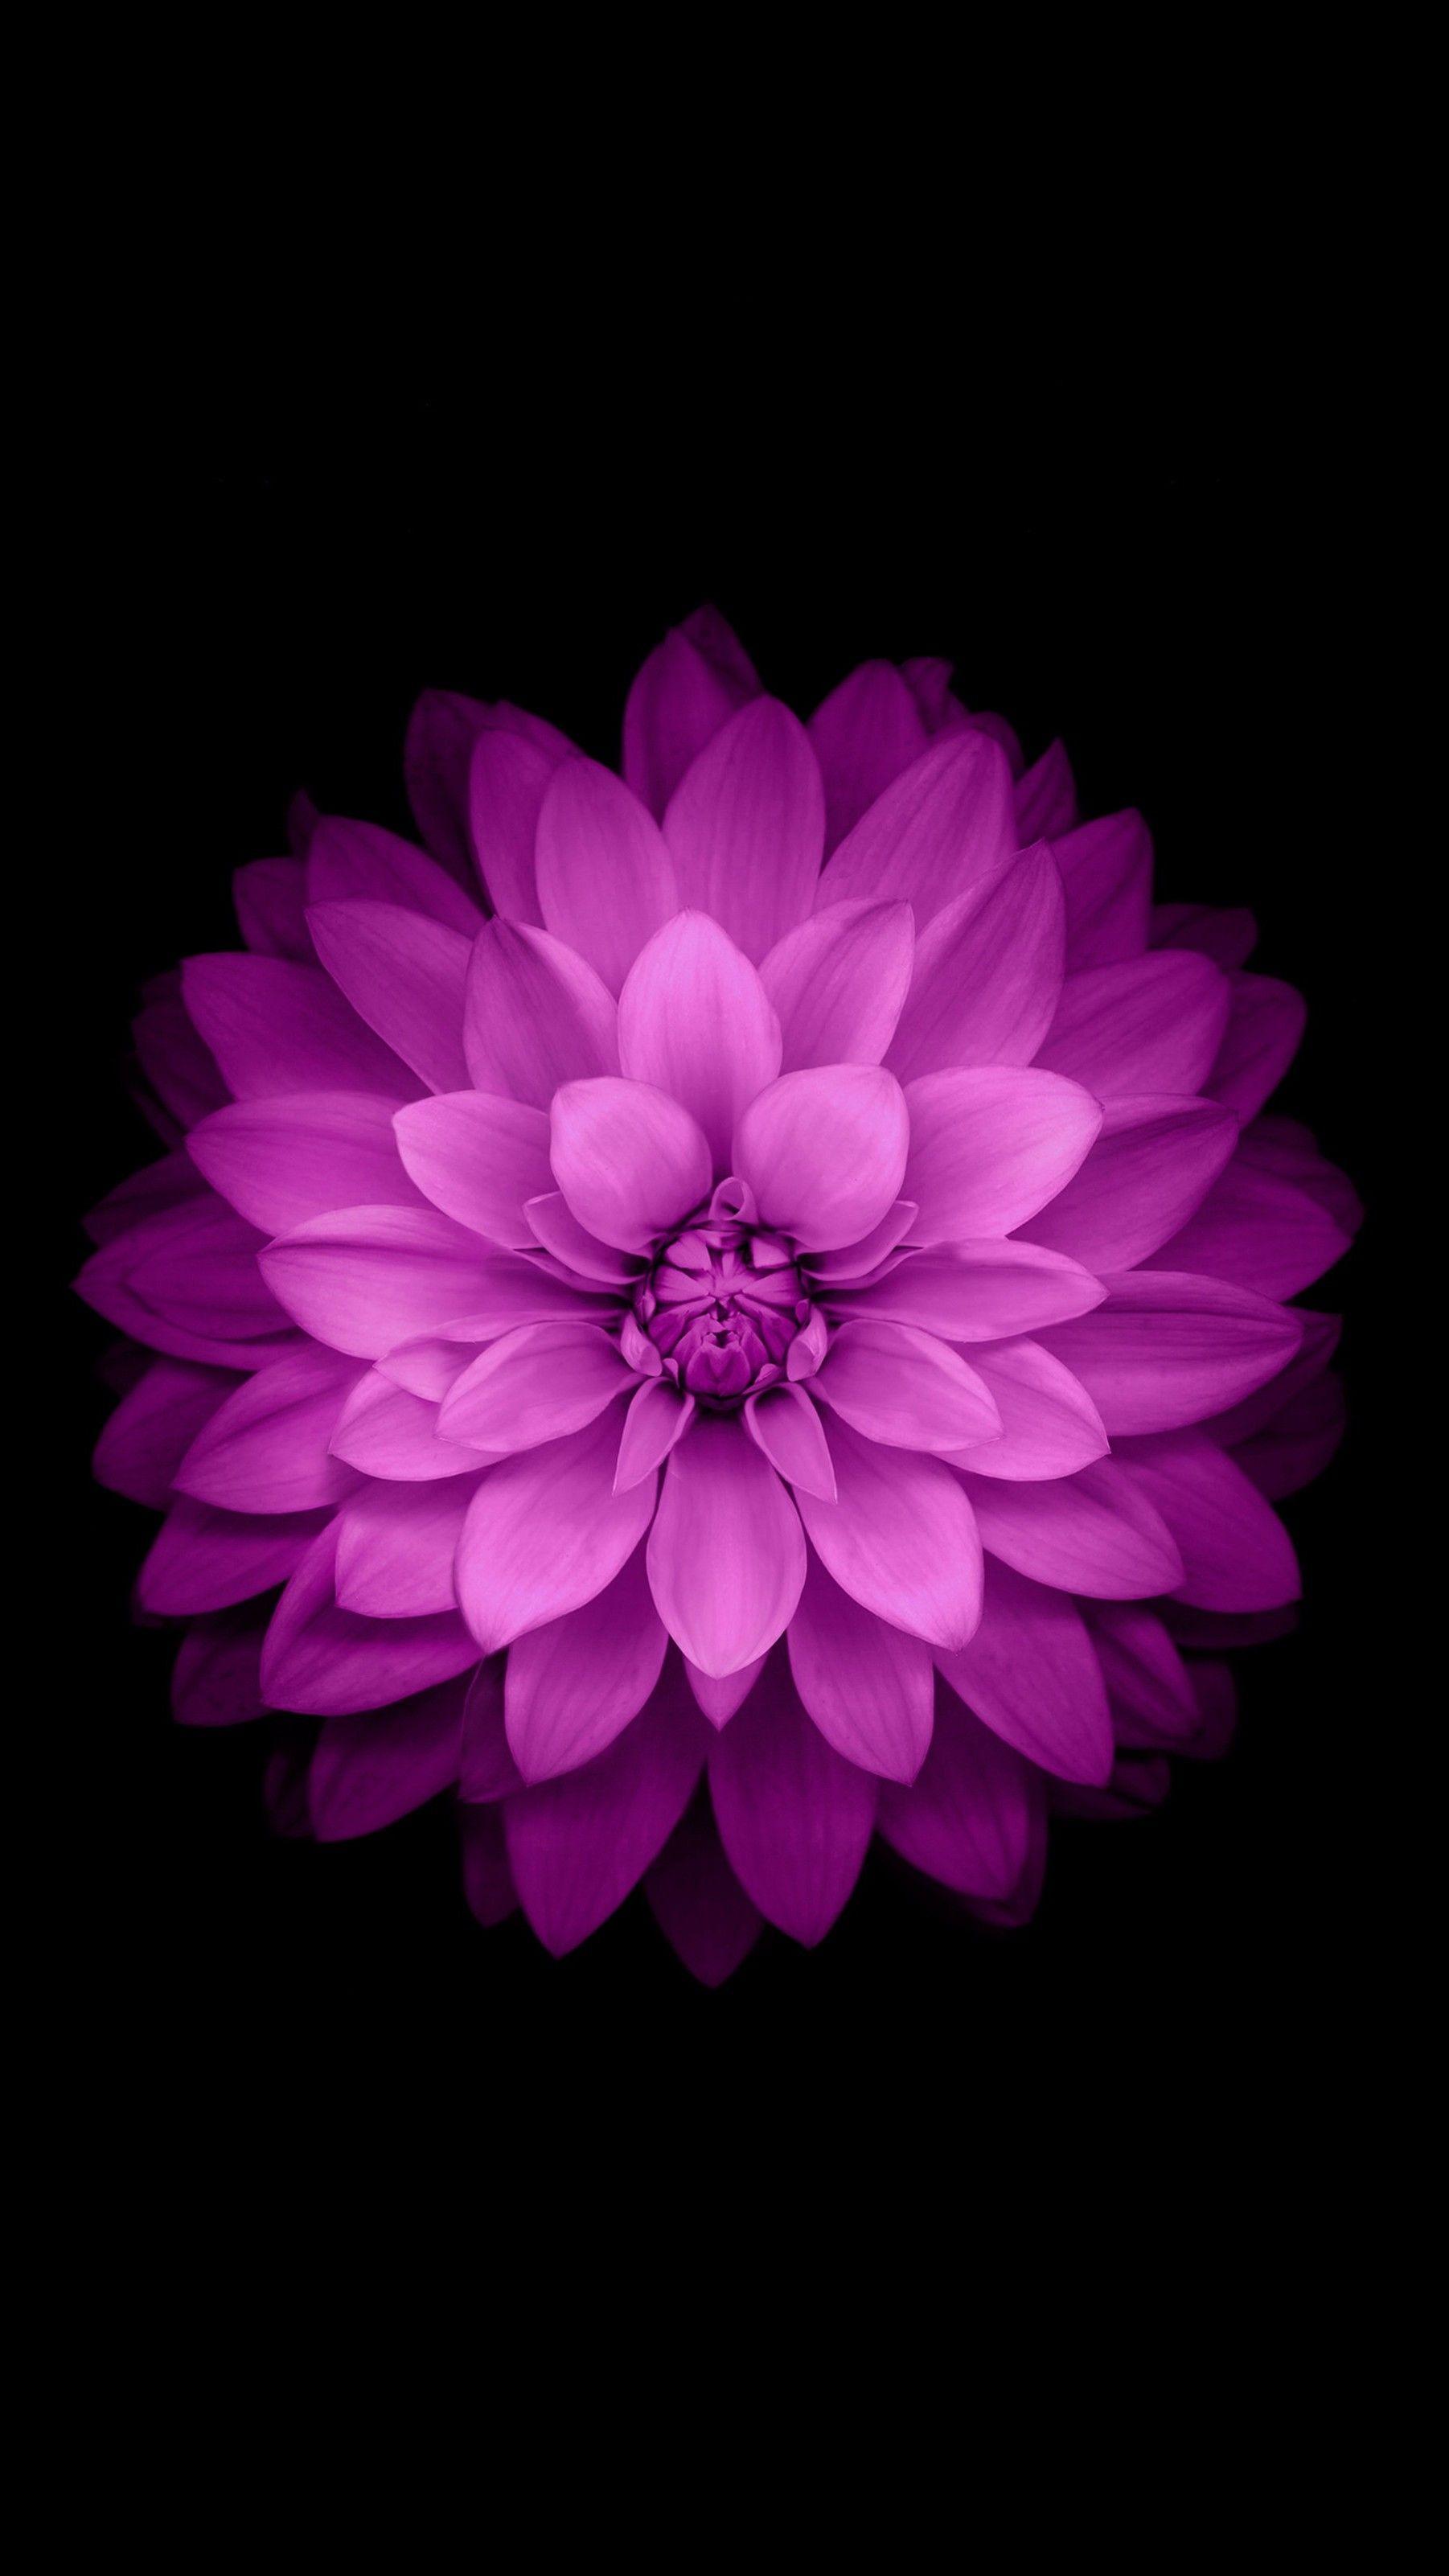 Free: Vertical pink flower wallpaper design - nohat.cc